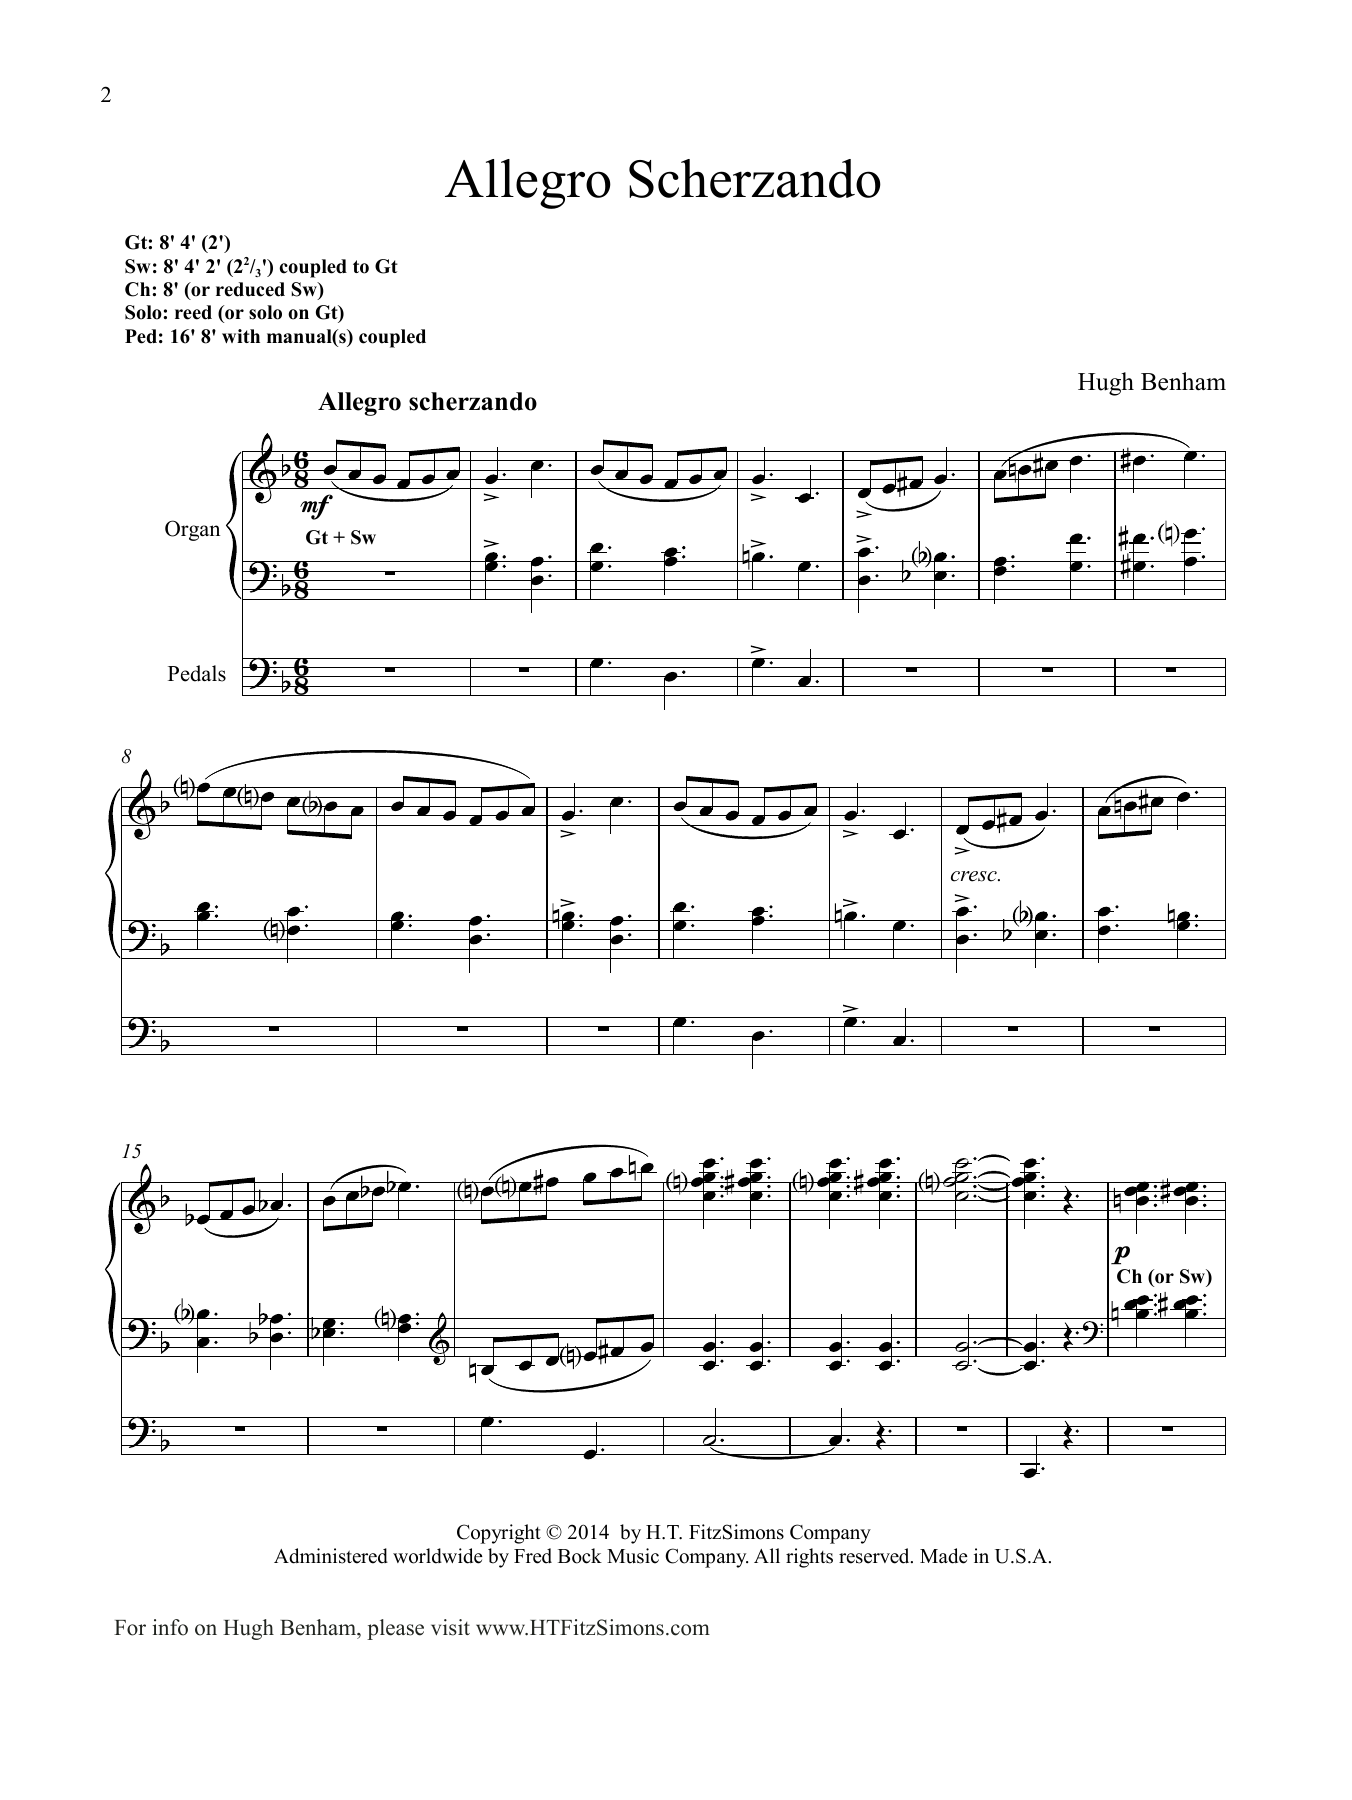 Download Hugh Benham Allegro Scherzando Sheet Music and learn how to play Organ PDF digital score in minutes